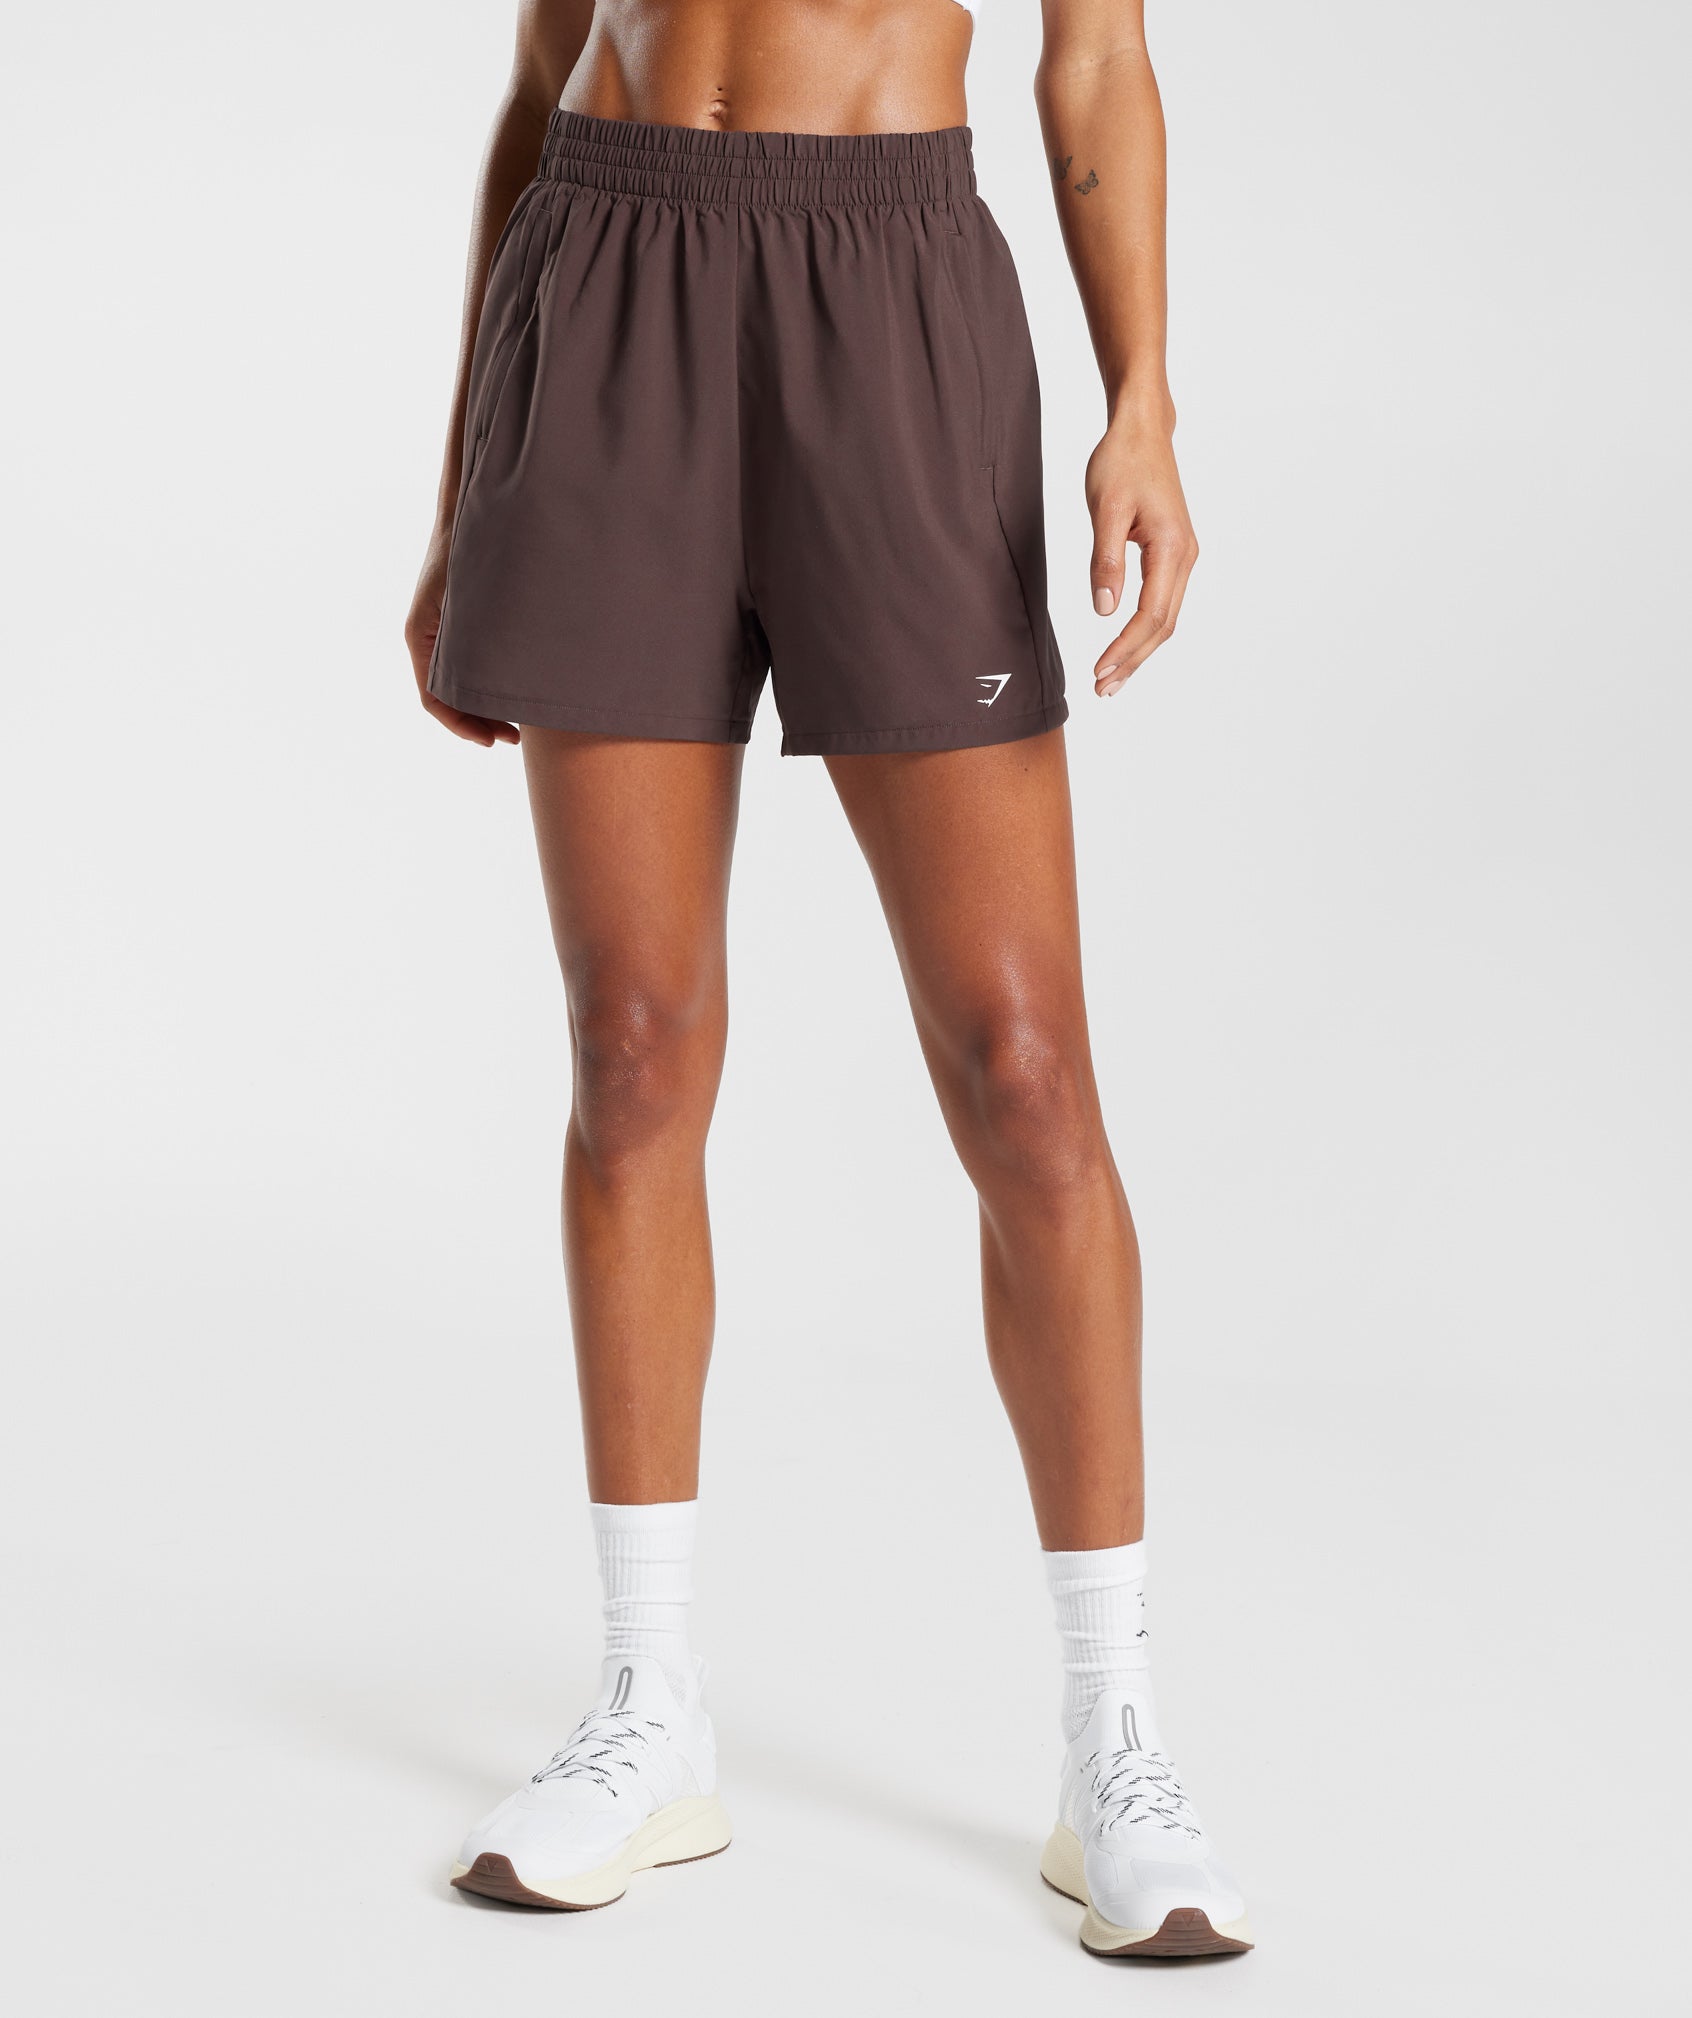 Gymshark Vital Seamless 2.0 2-in-1 Shorts - Baked Maroon Marl